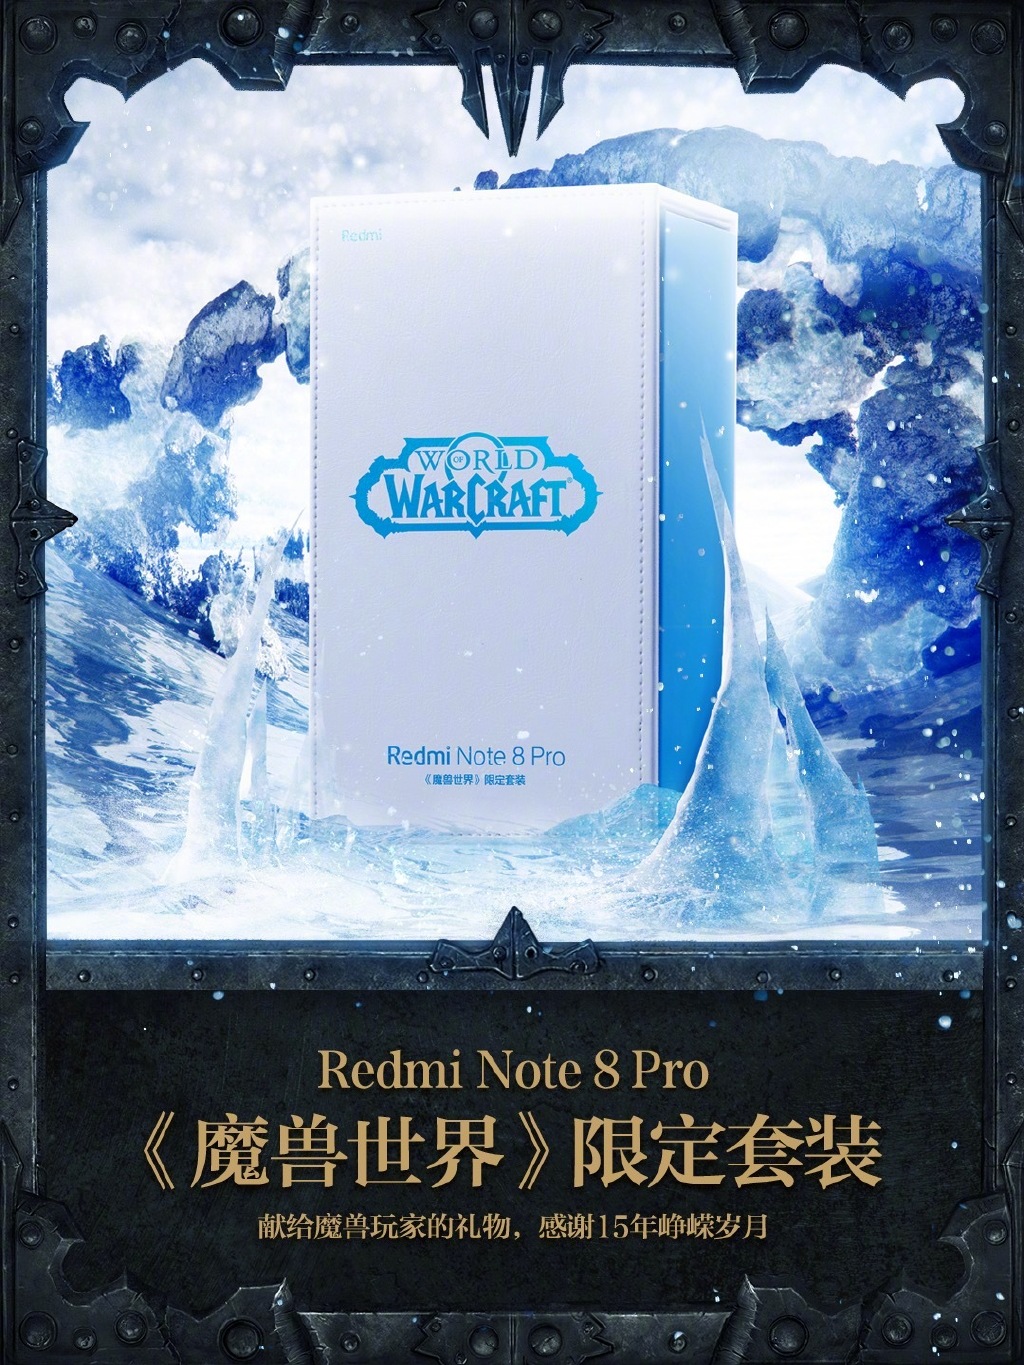 Redmi-Note-8-Pro-World-of-Warcraft-Limited-Edition-b